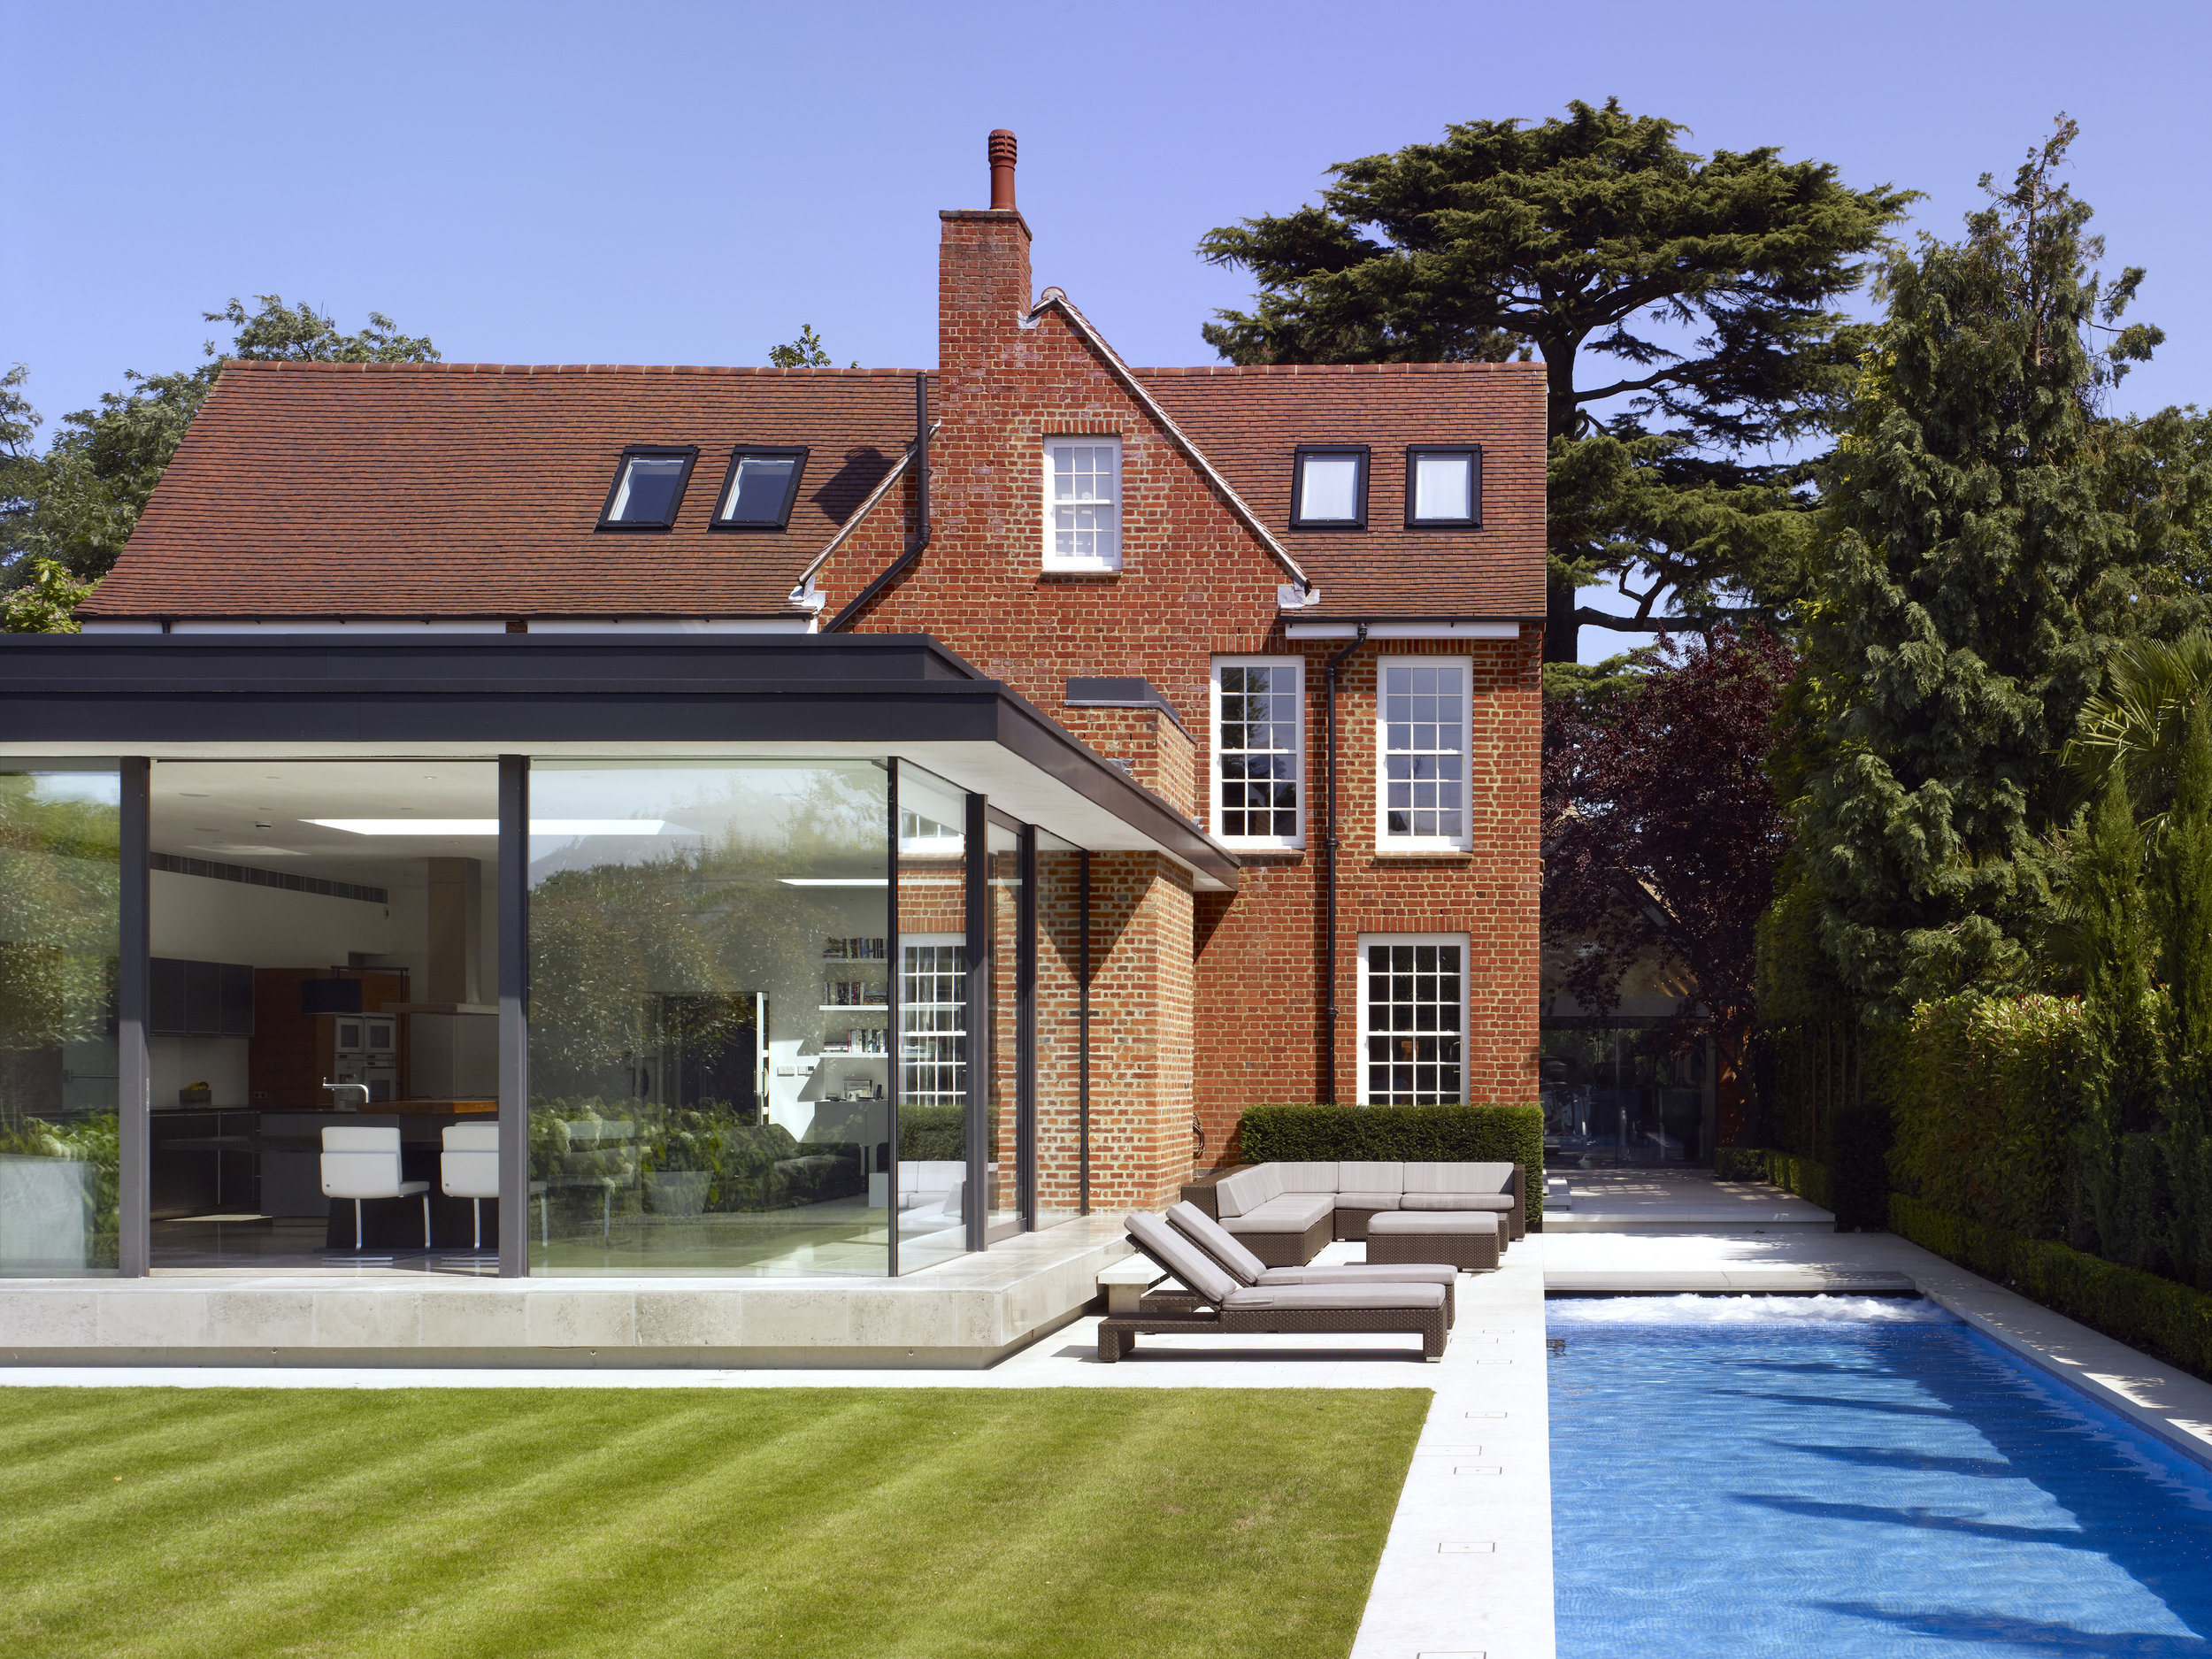 Award Winning Luxury House Renovation London, including swimming pool jacuzzi car lift and gym, by minimalist London architect practice Thompson + Baroni